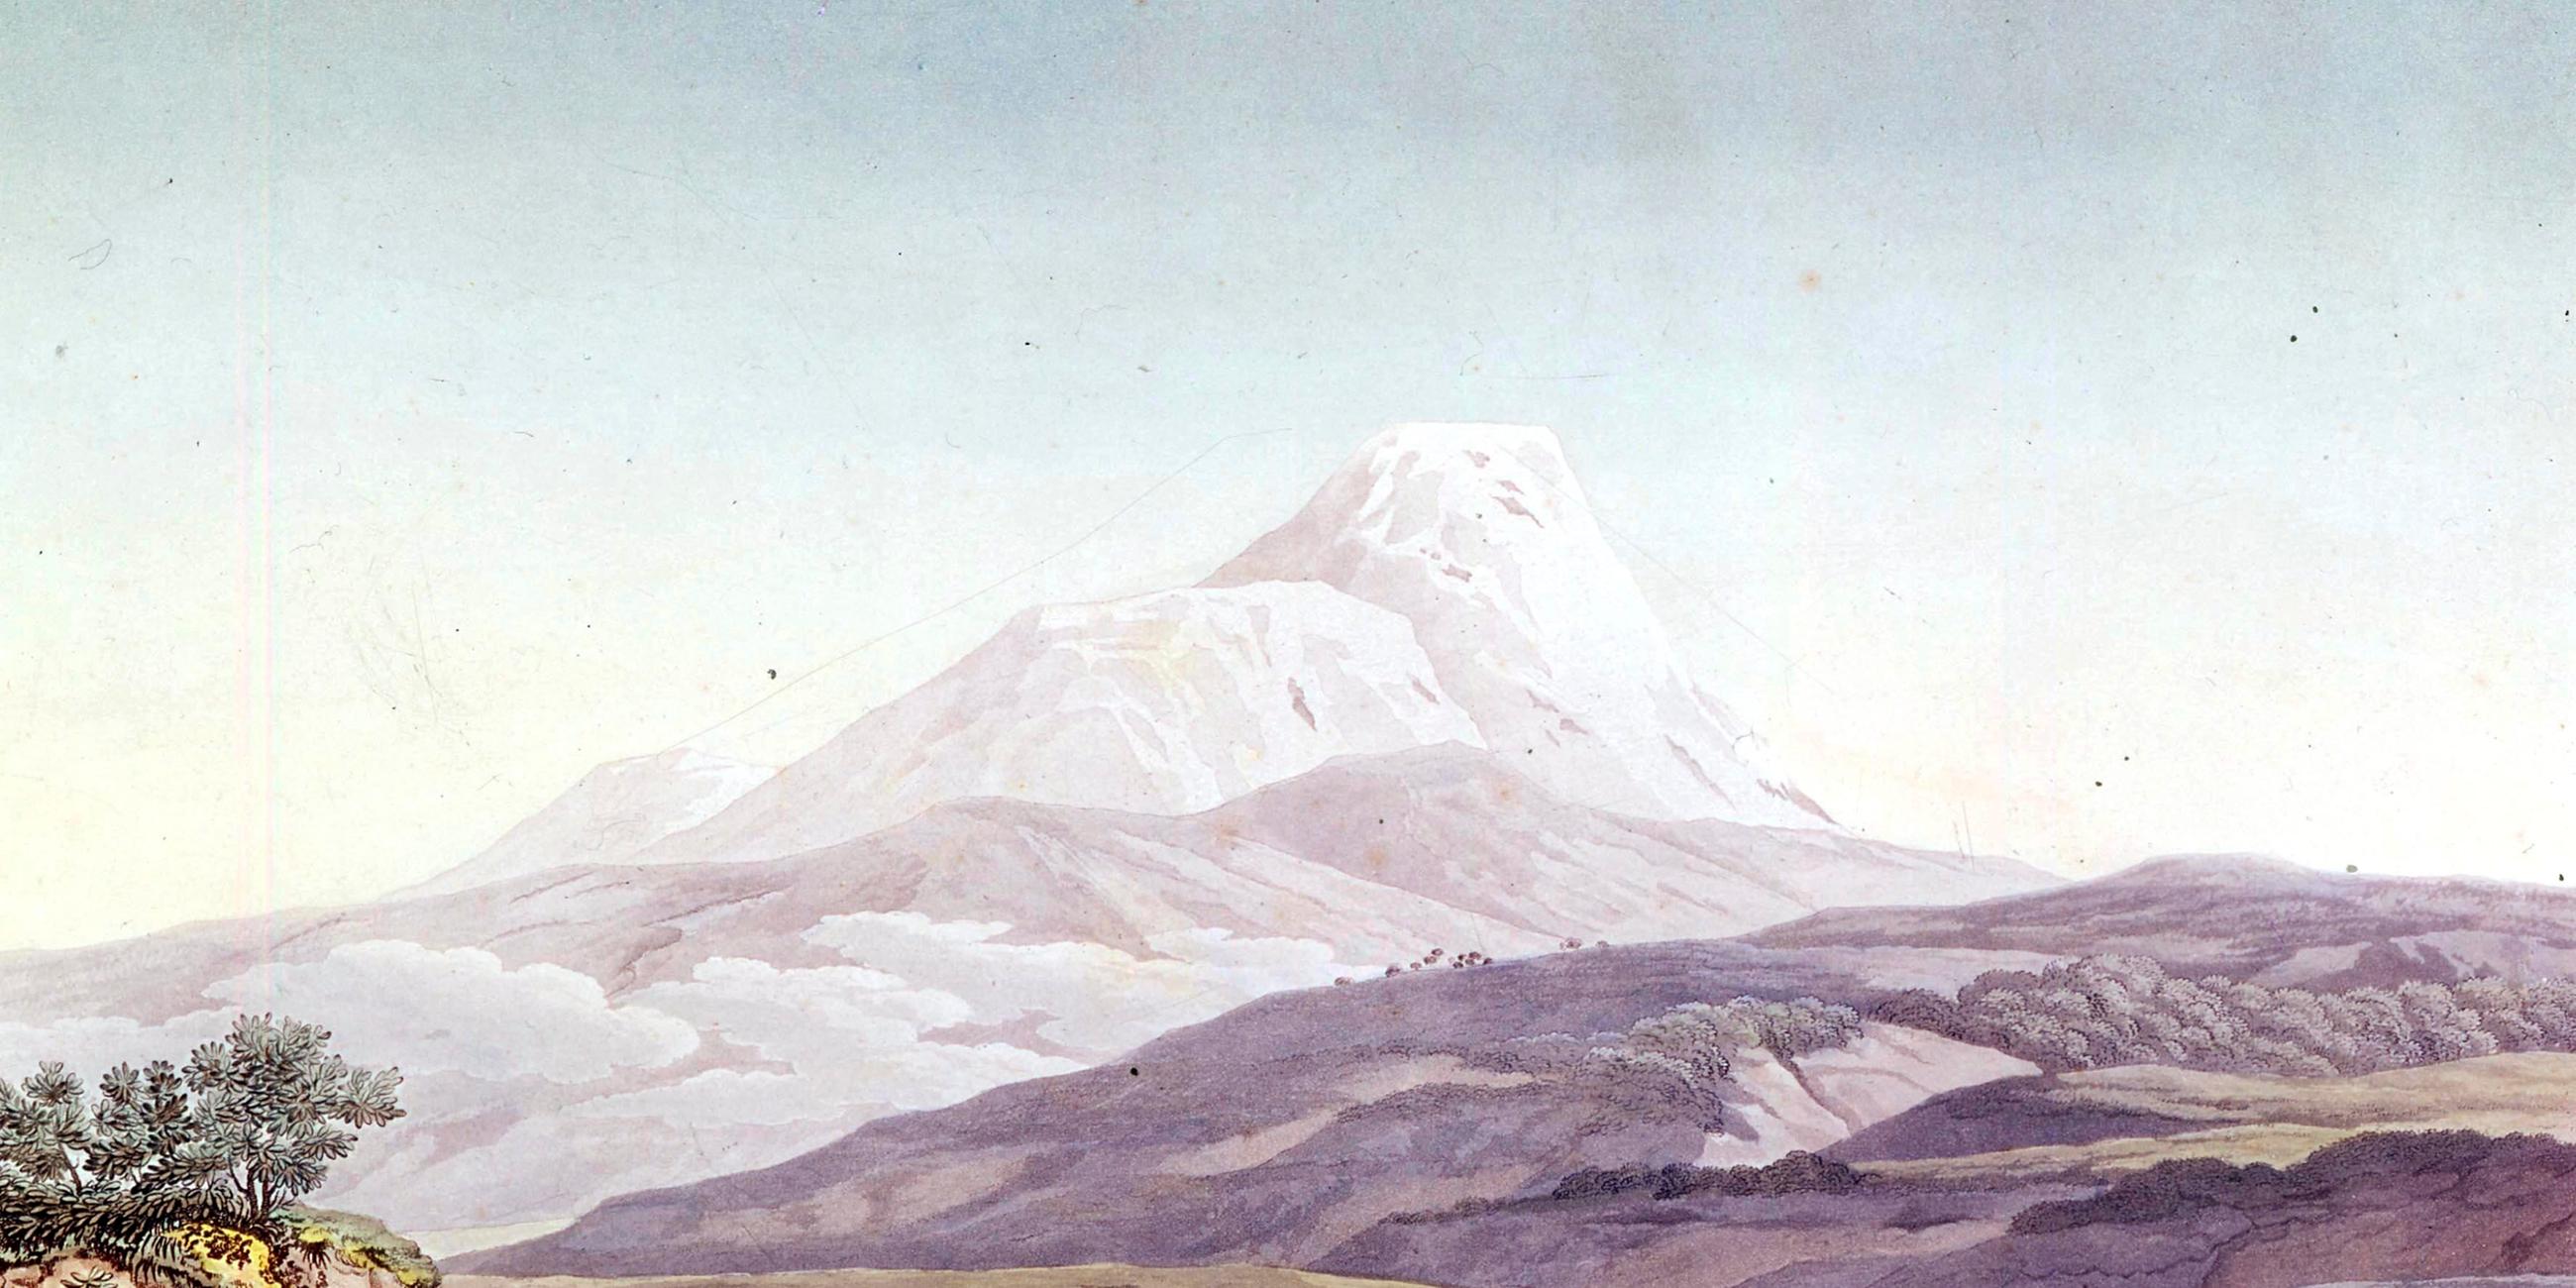 Humboldt auf Expedition in Mexiko